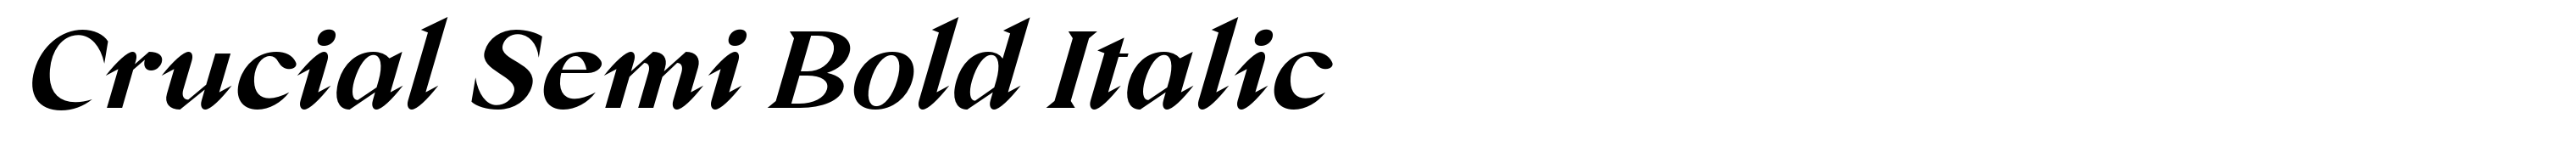 Crucial Semi Bold Italic